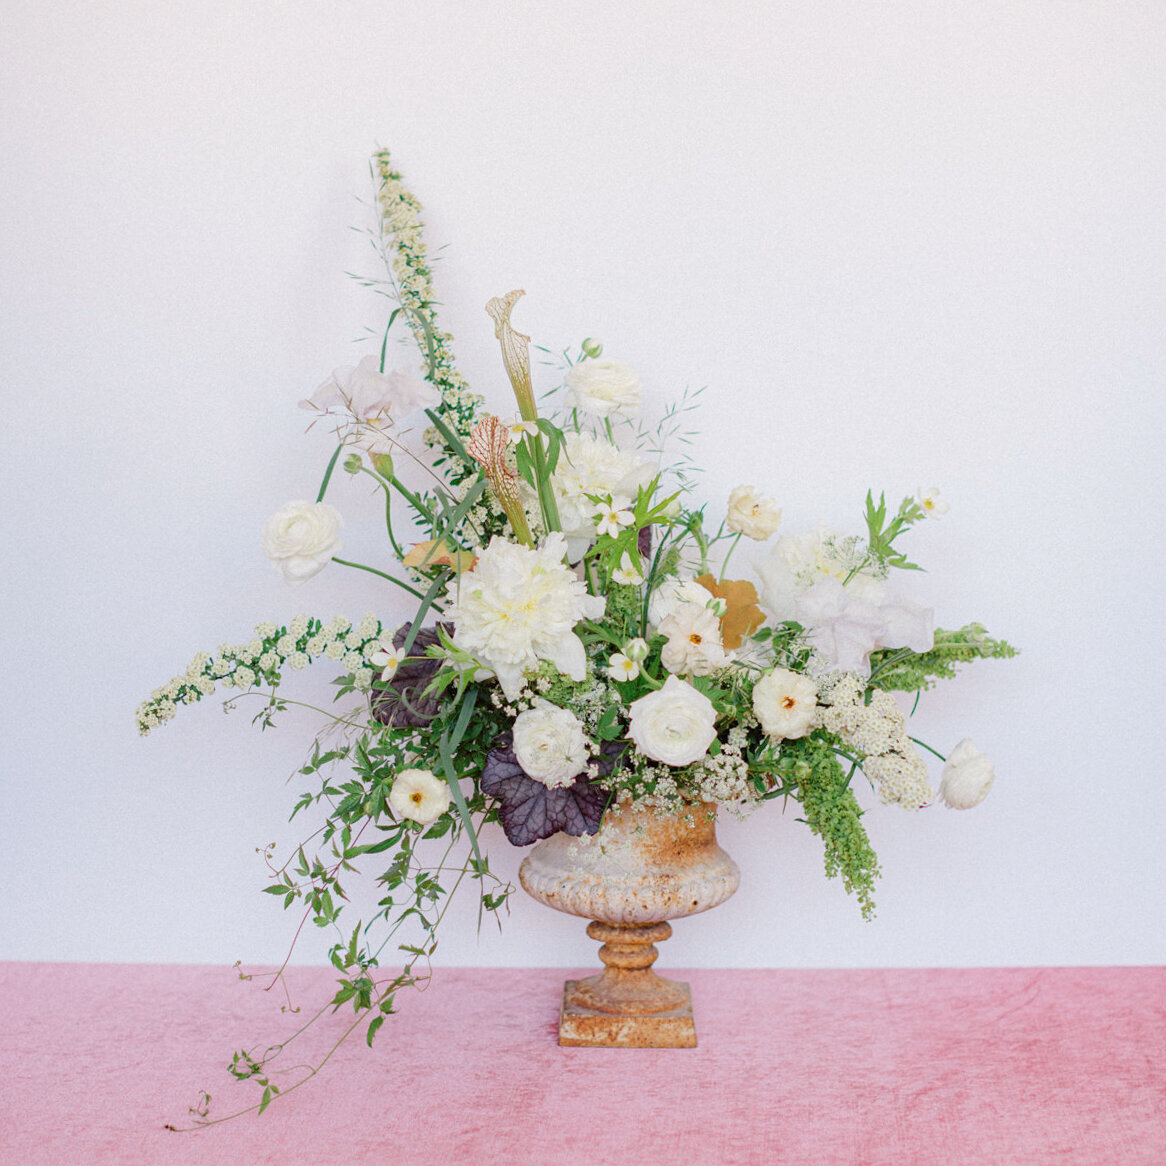 Atelier-Carmel-Wedding-Florist-GALLERY-Decor-14